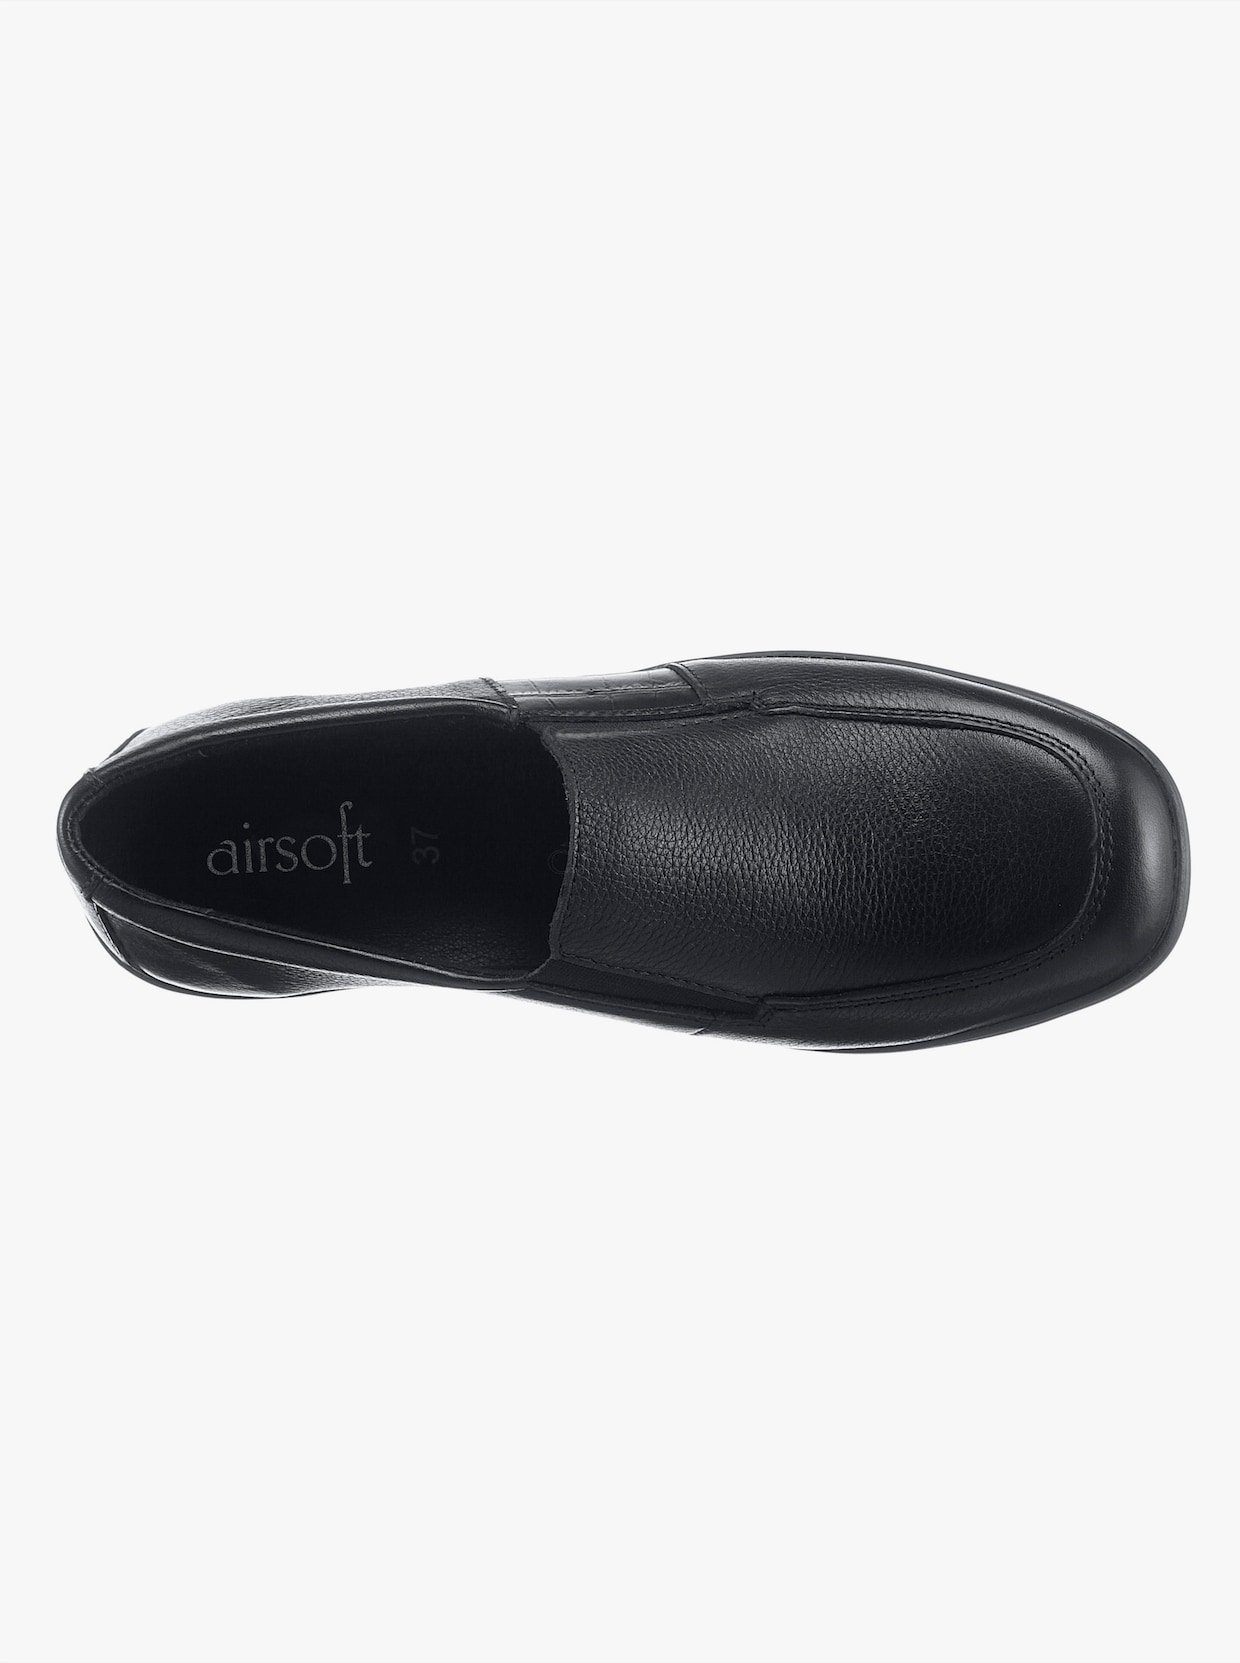 airsoft comfort+ Slipery - čierna